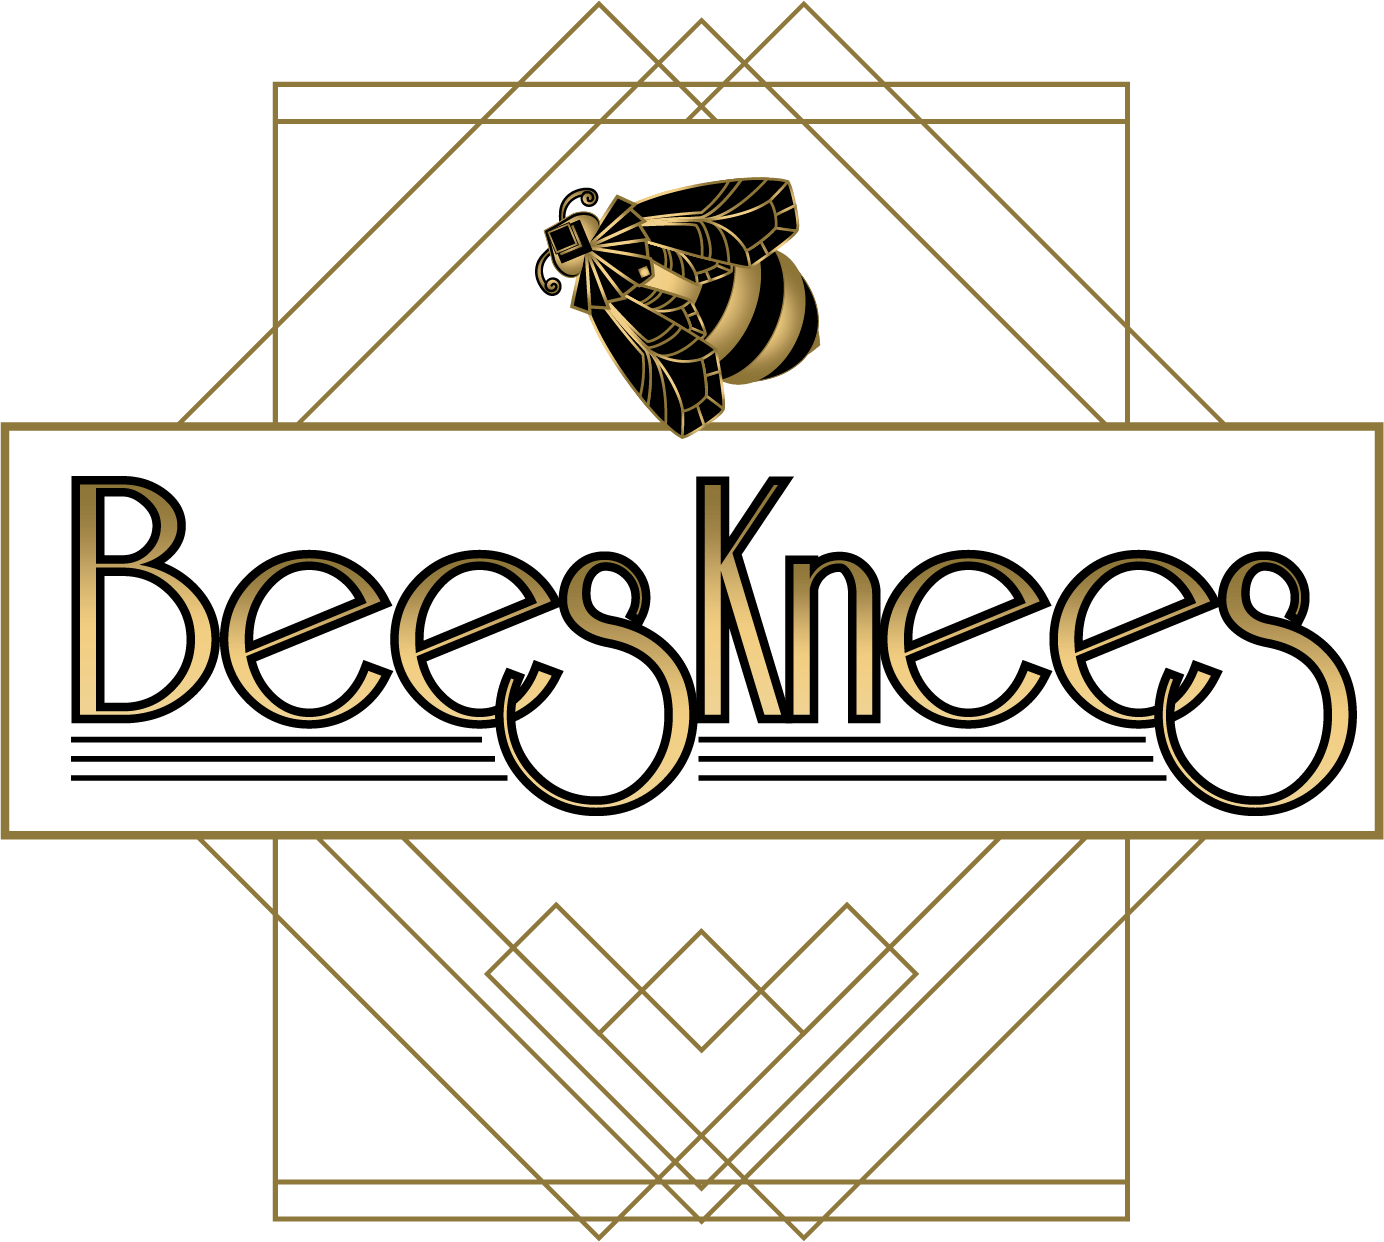 bees knees logo design, local branding graphic design